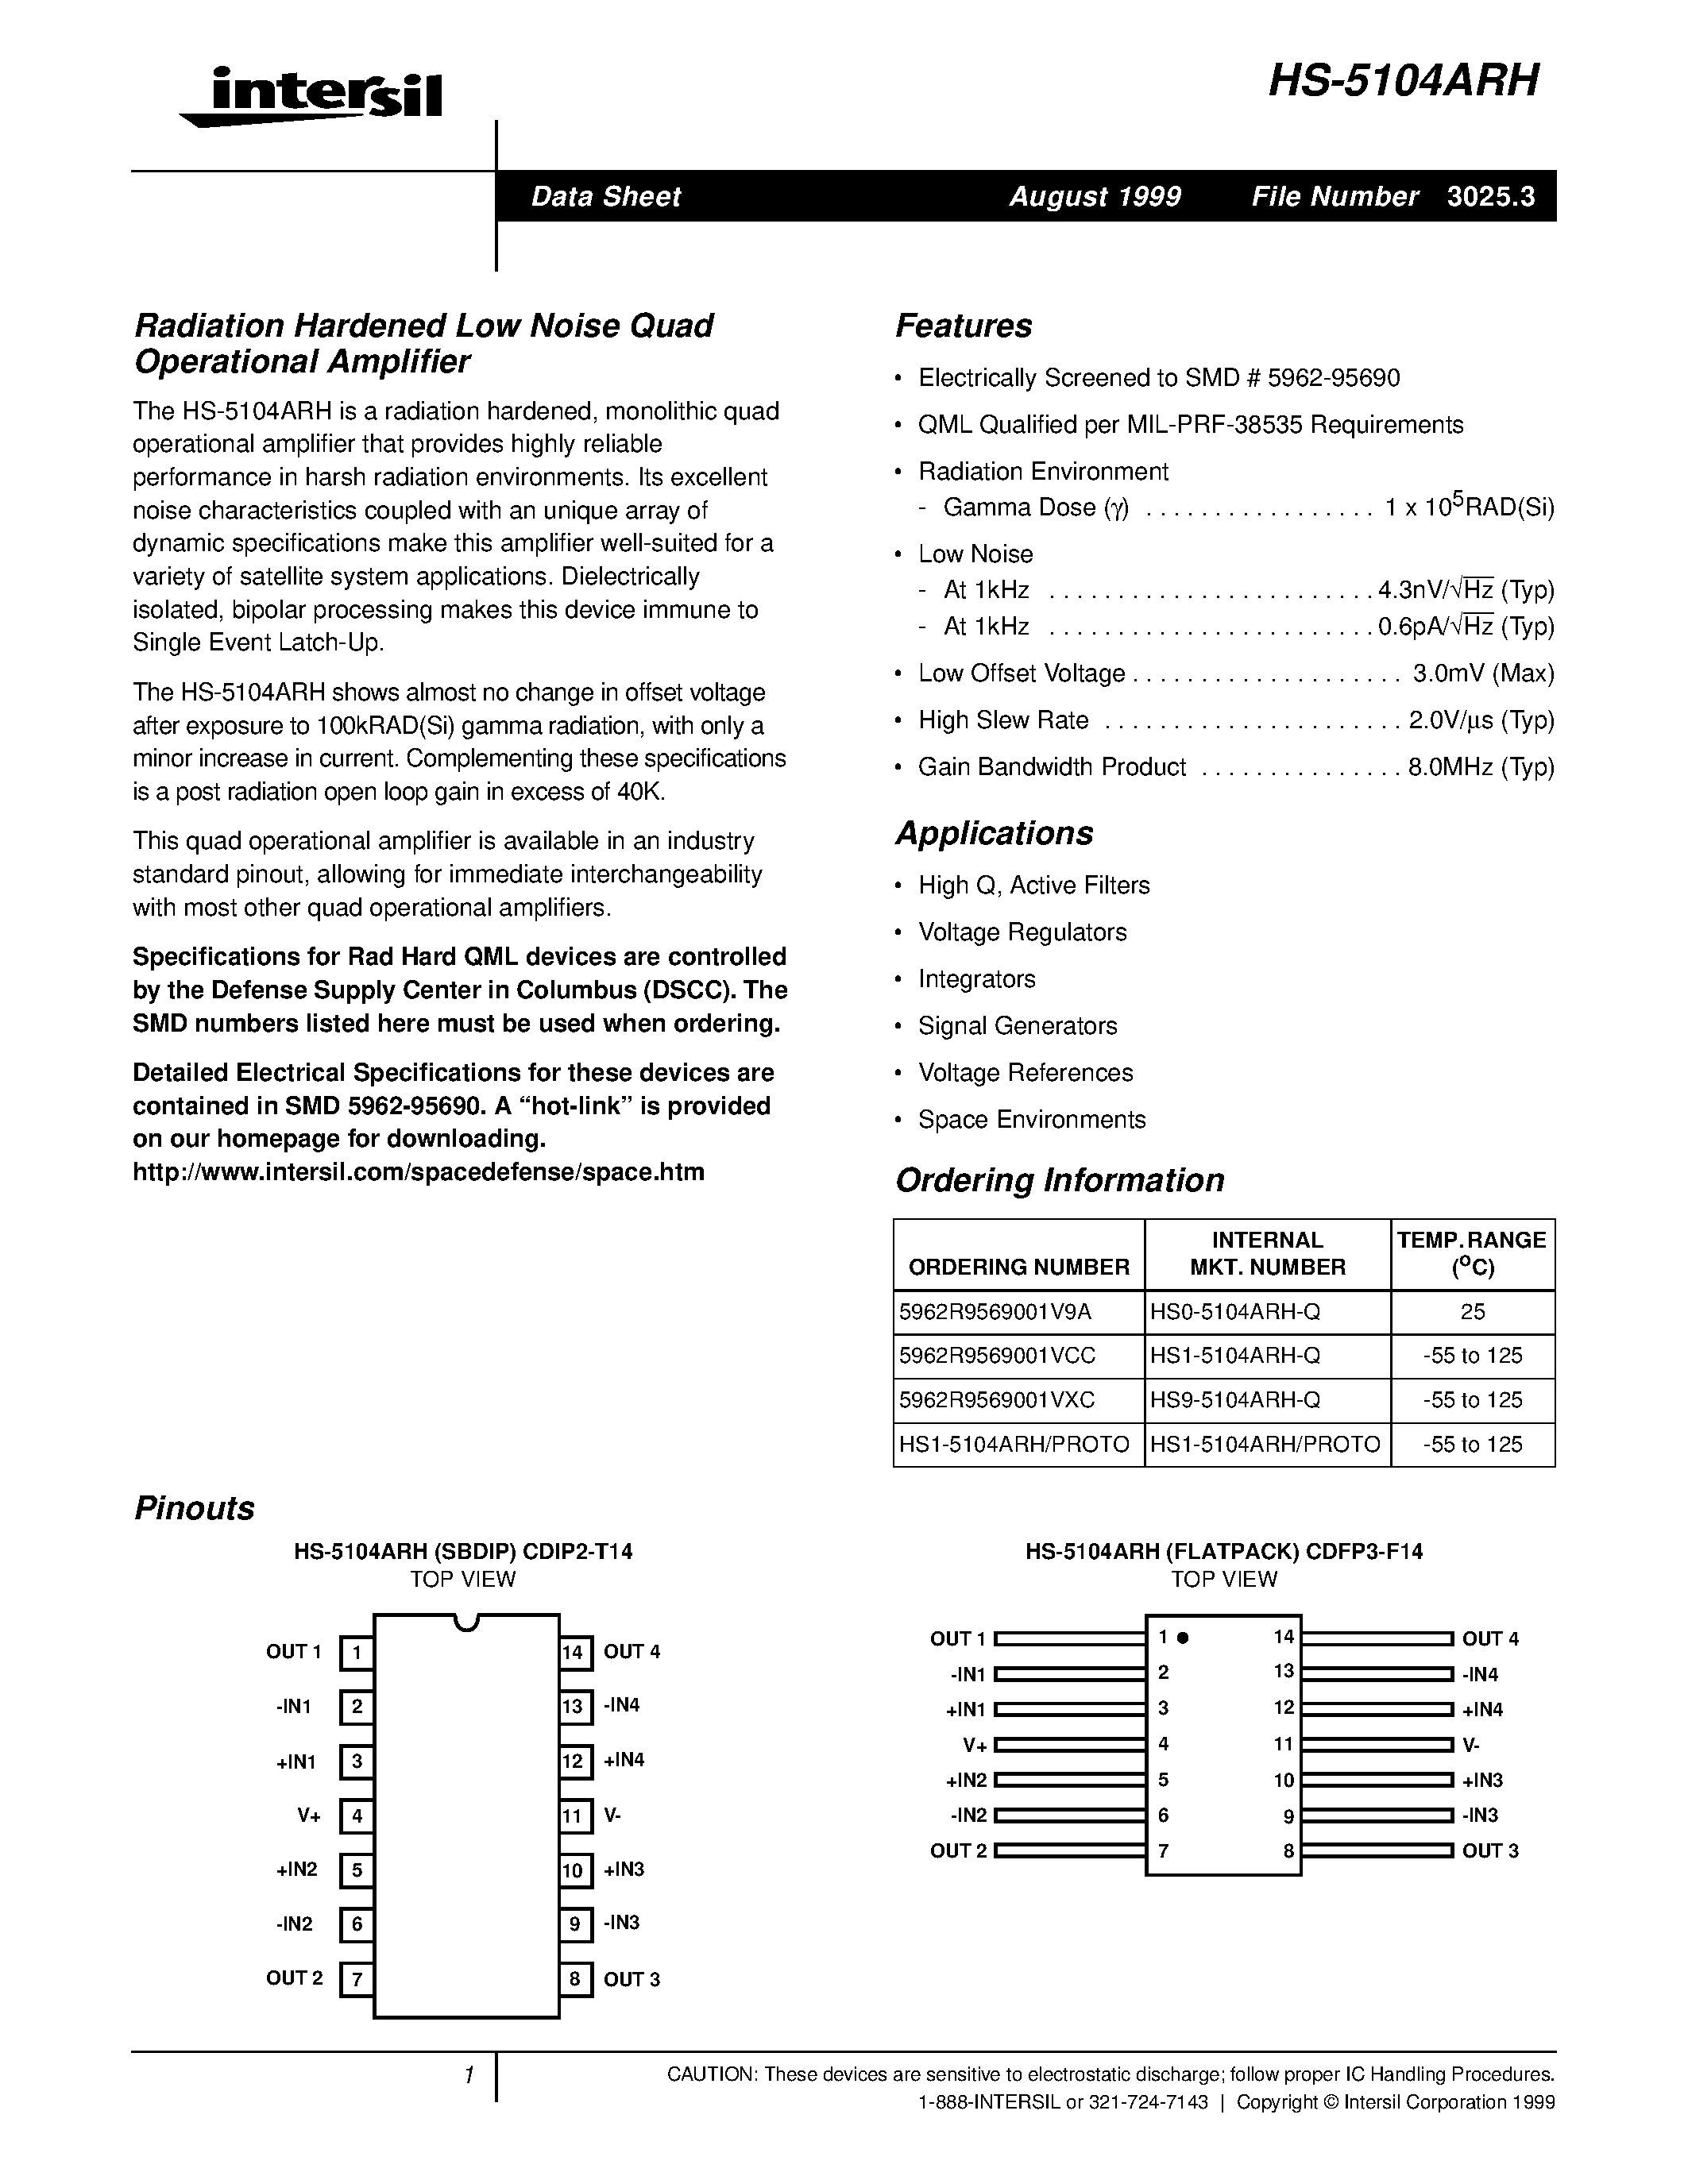 Даташит HS0-5104ARH-Q - Radiation Hardened Low Noise Quad Operational Amplifier страница 1